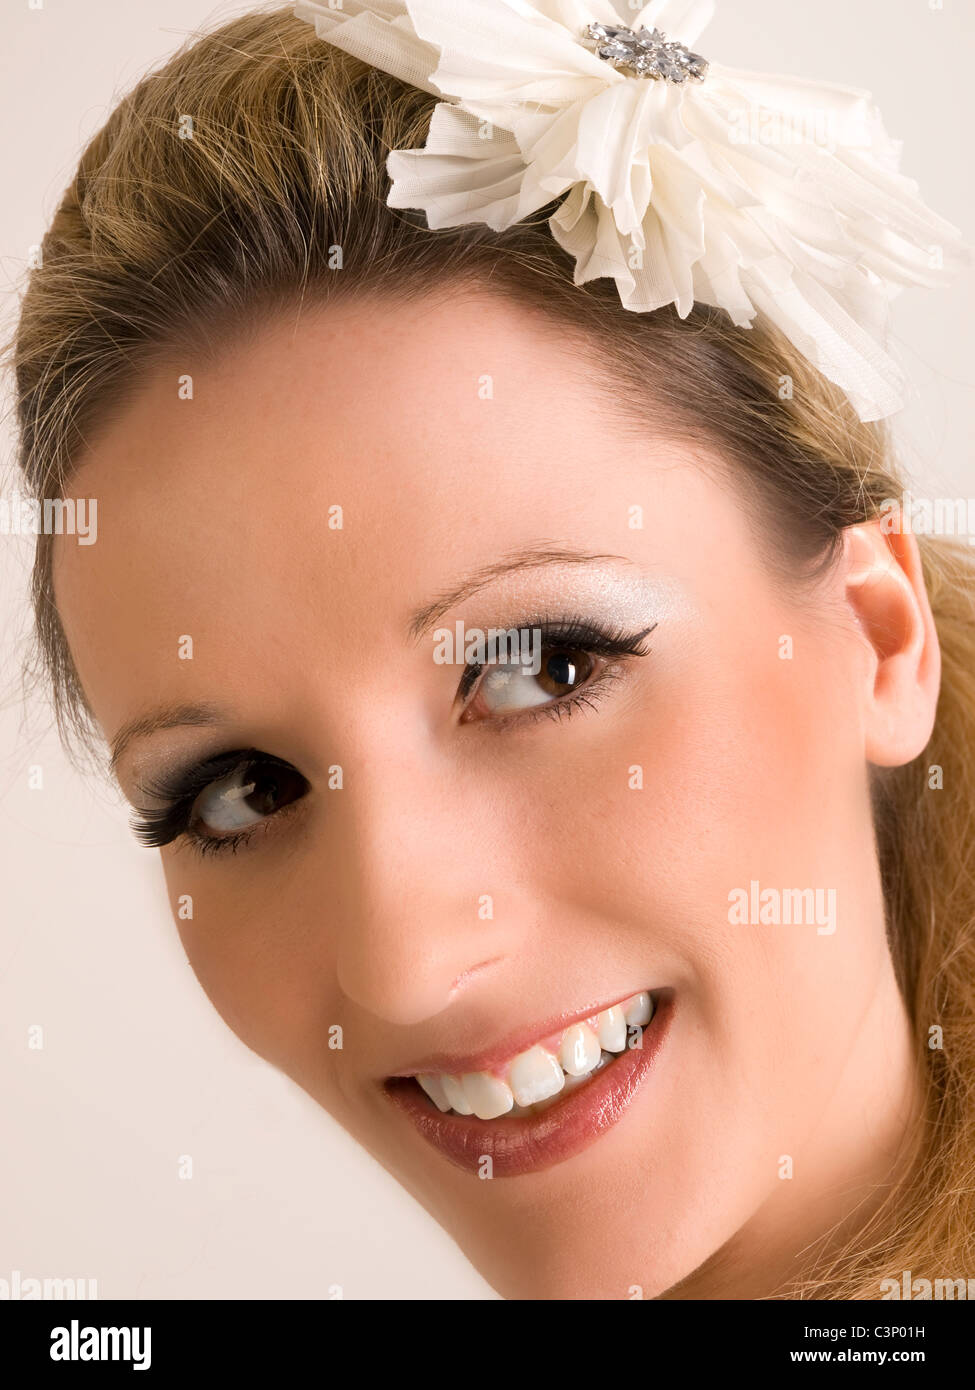 Attractive Blond female portrait Stock Photo